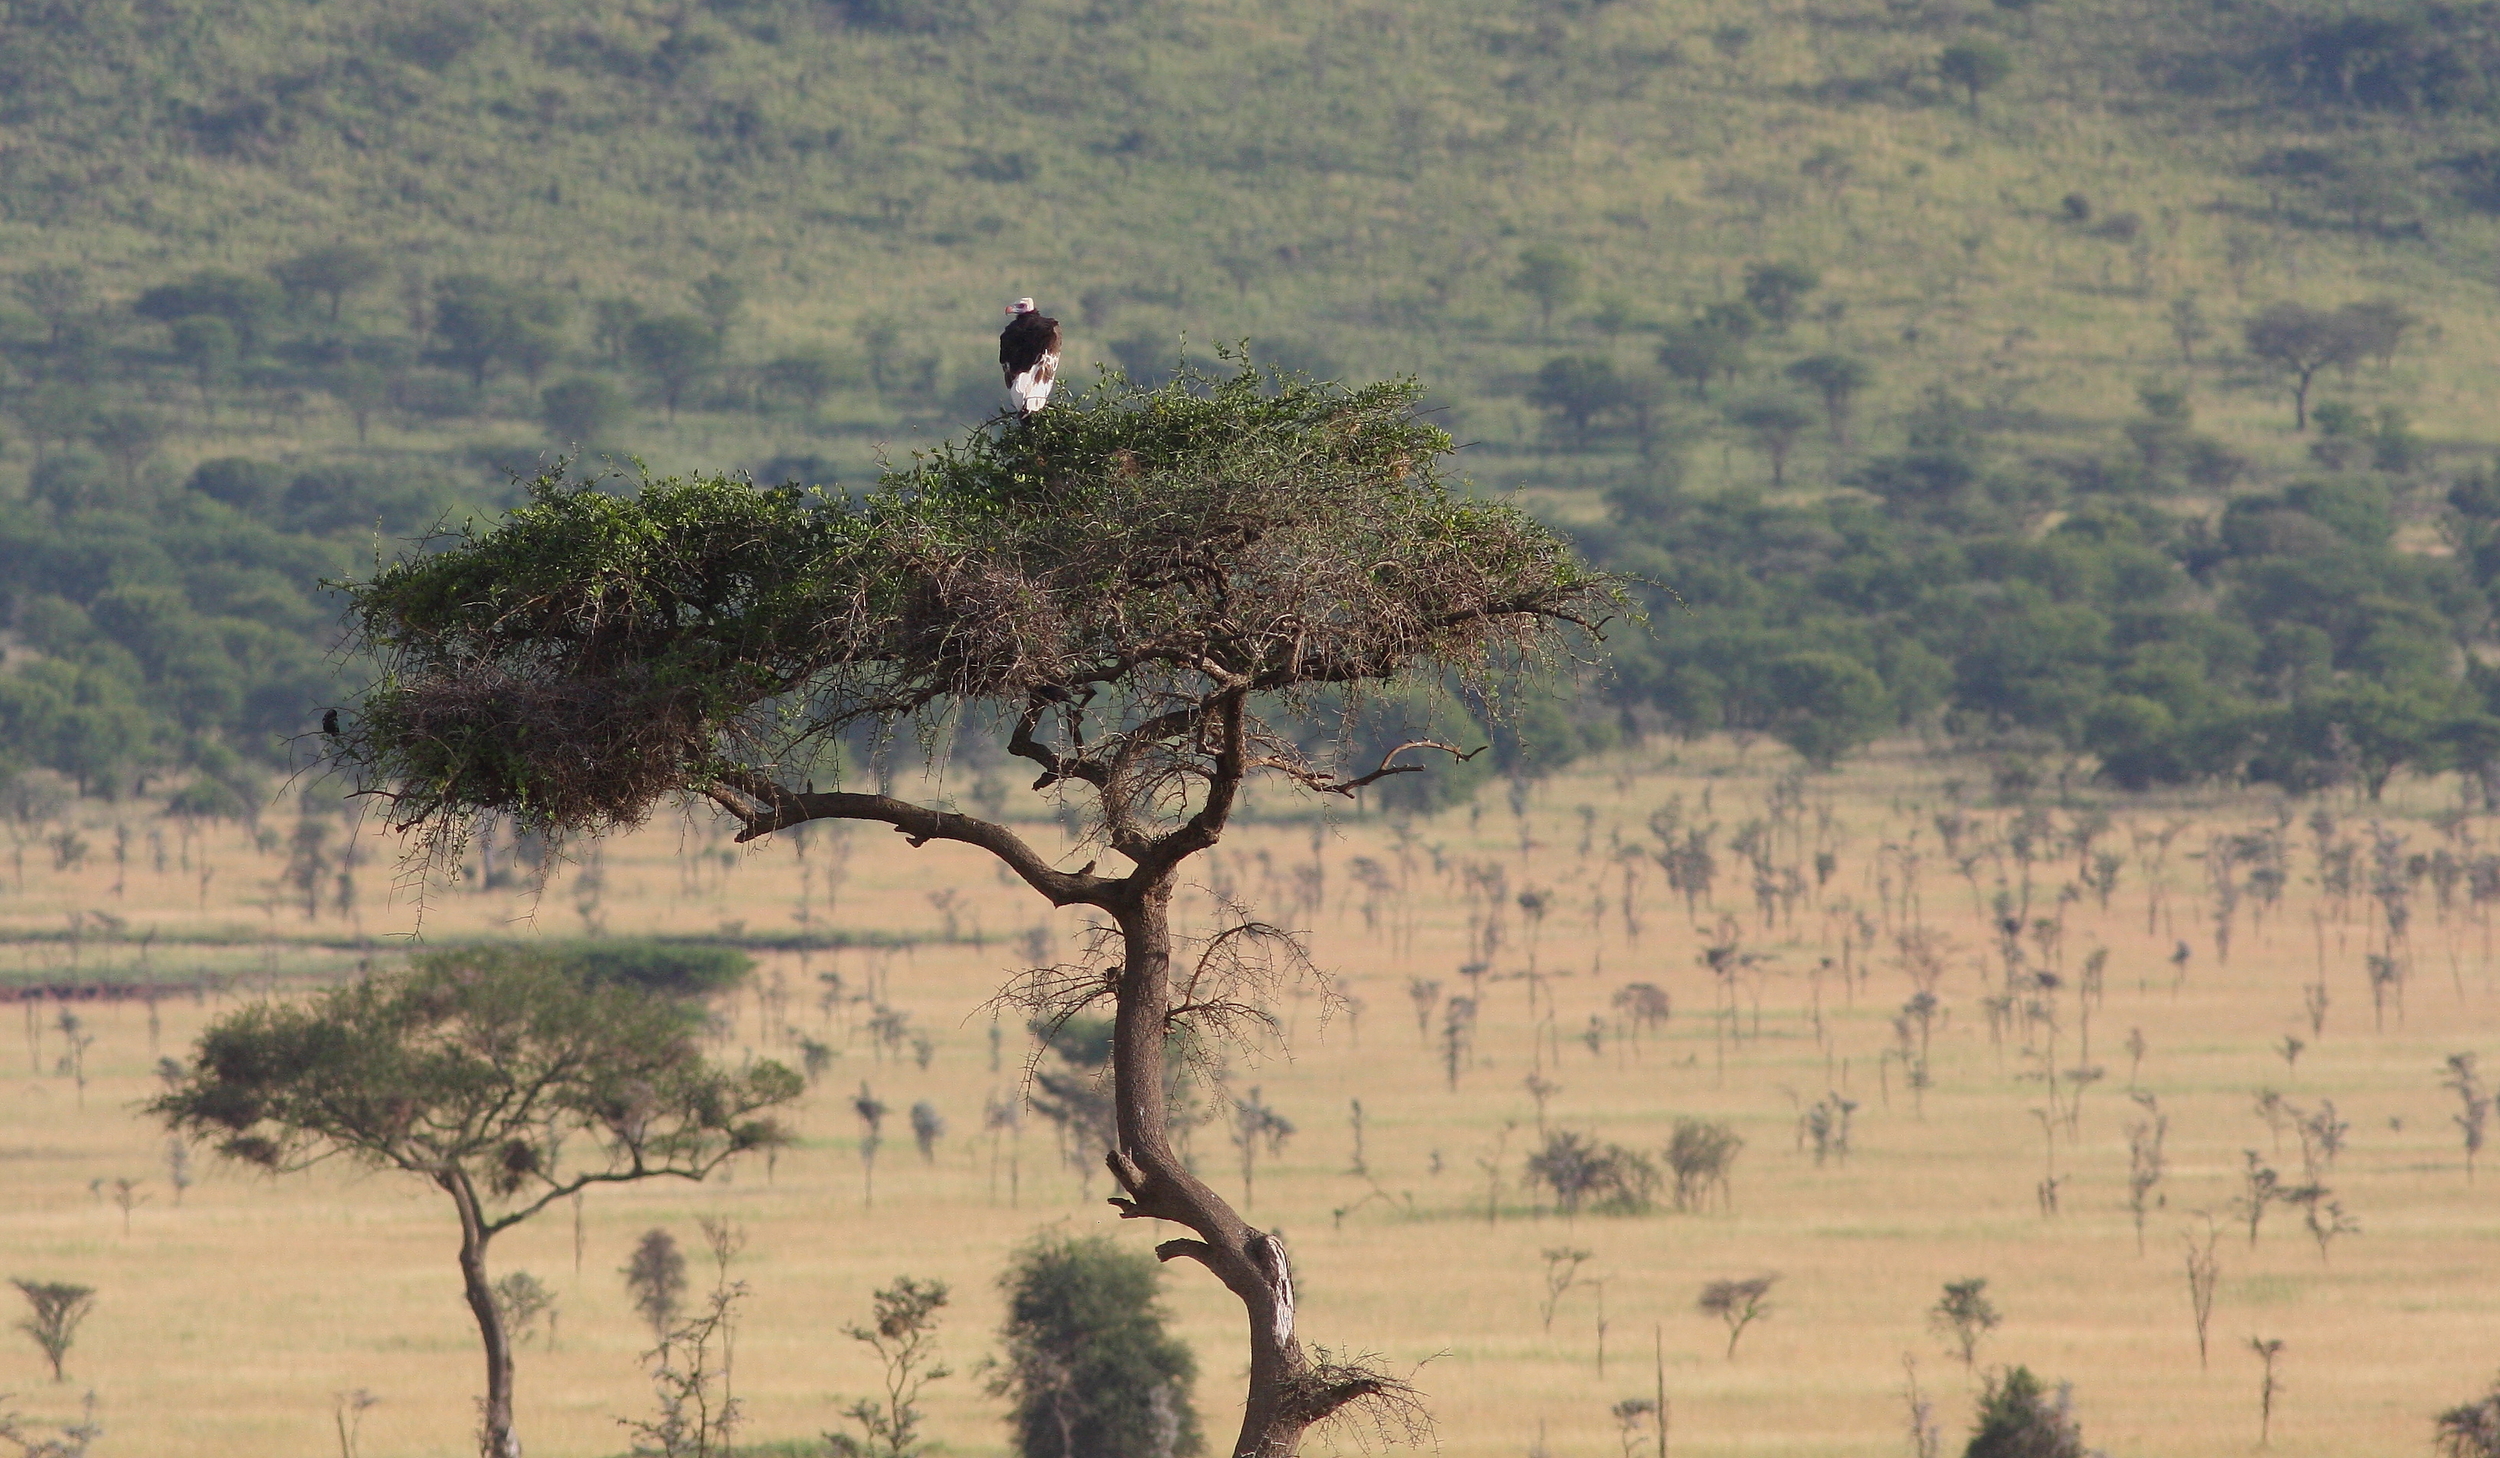  Serengeti, Tanzania 